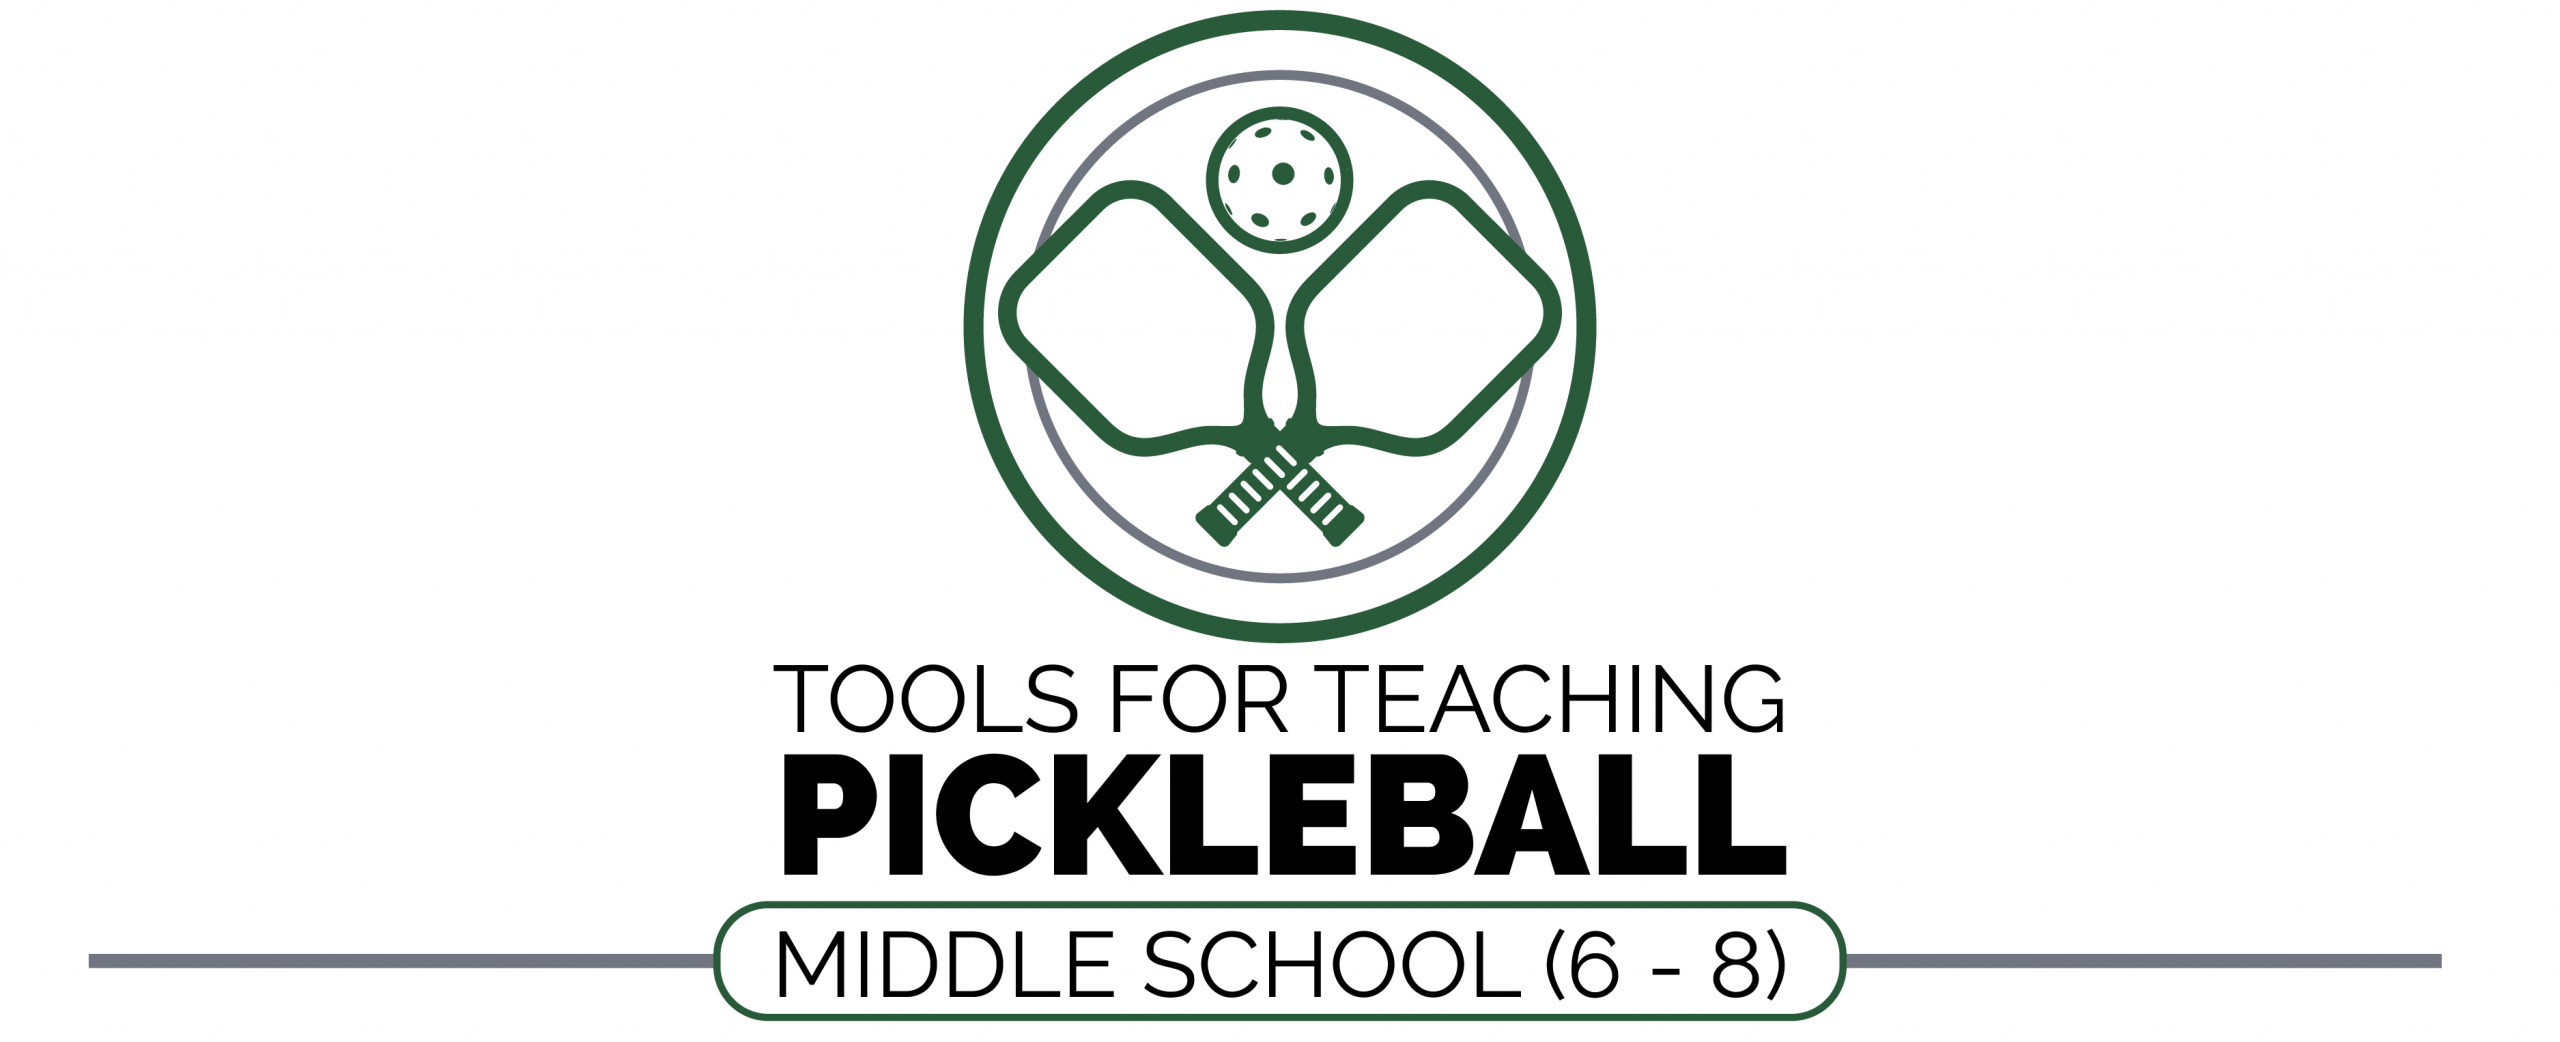 Pickleball - Open Physical Education Curriculum